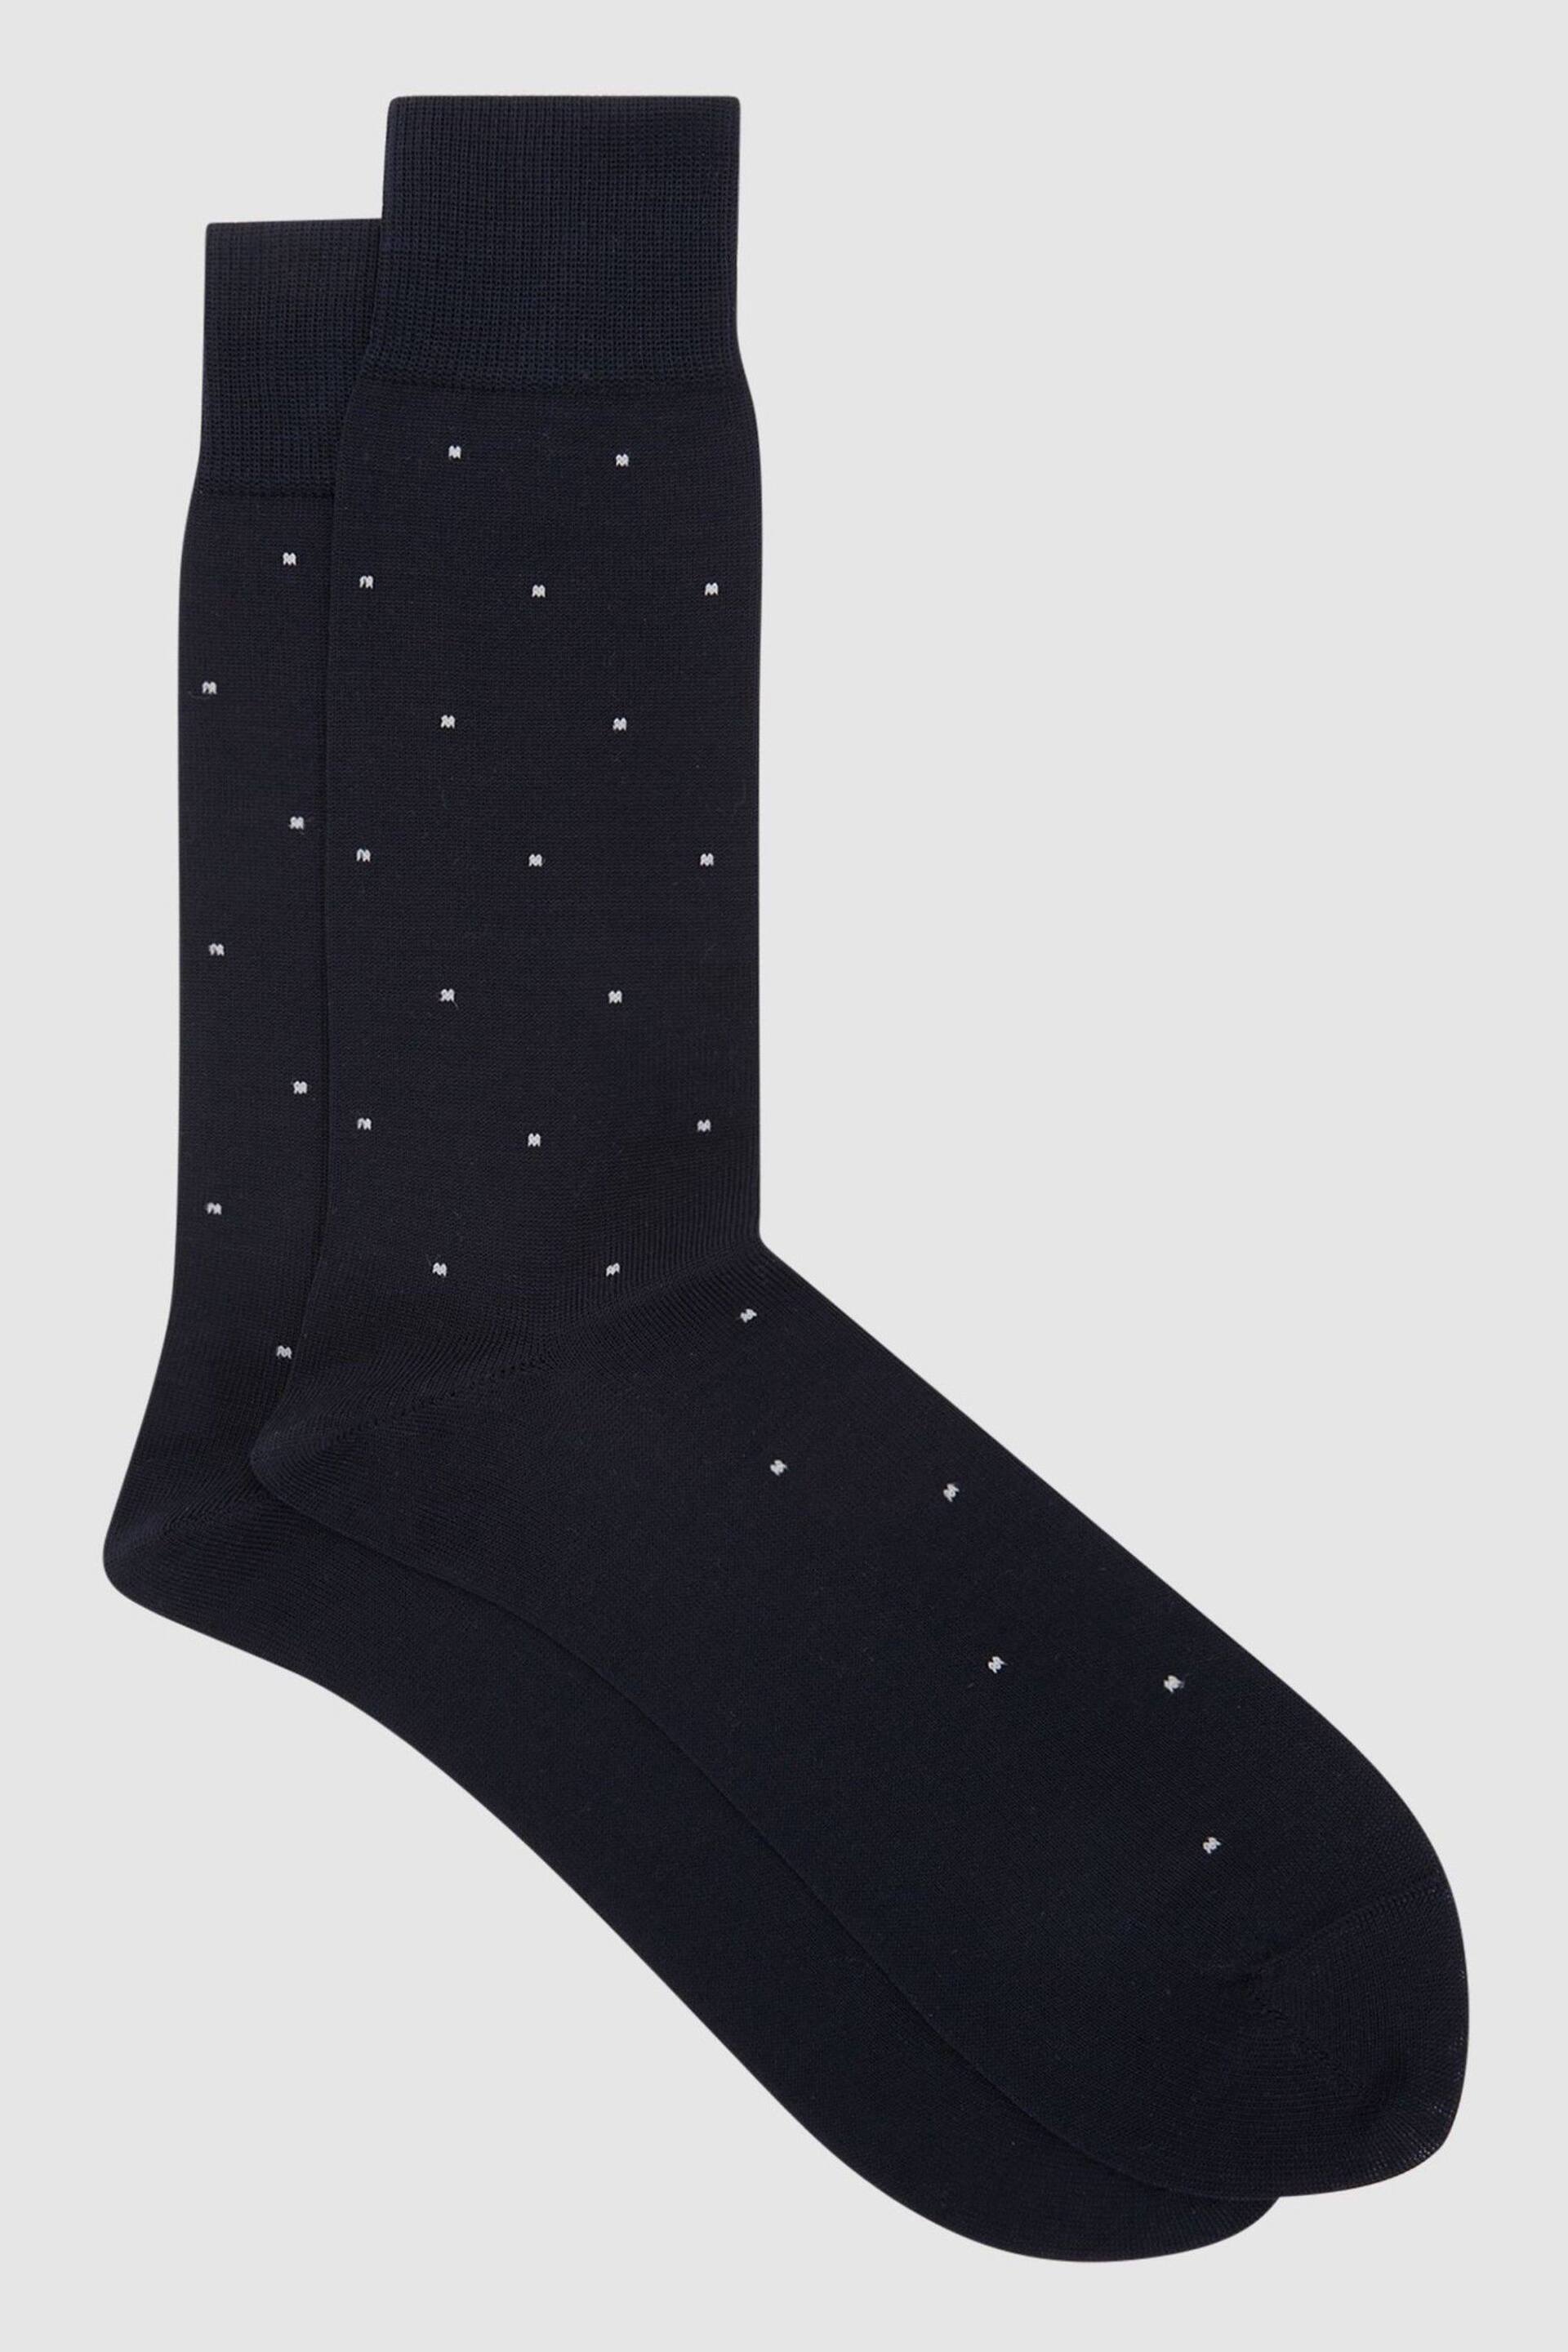 Reiss Navy Mario Spot Polka Dot Socks - Image 1 of 4